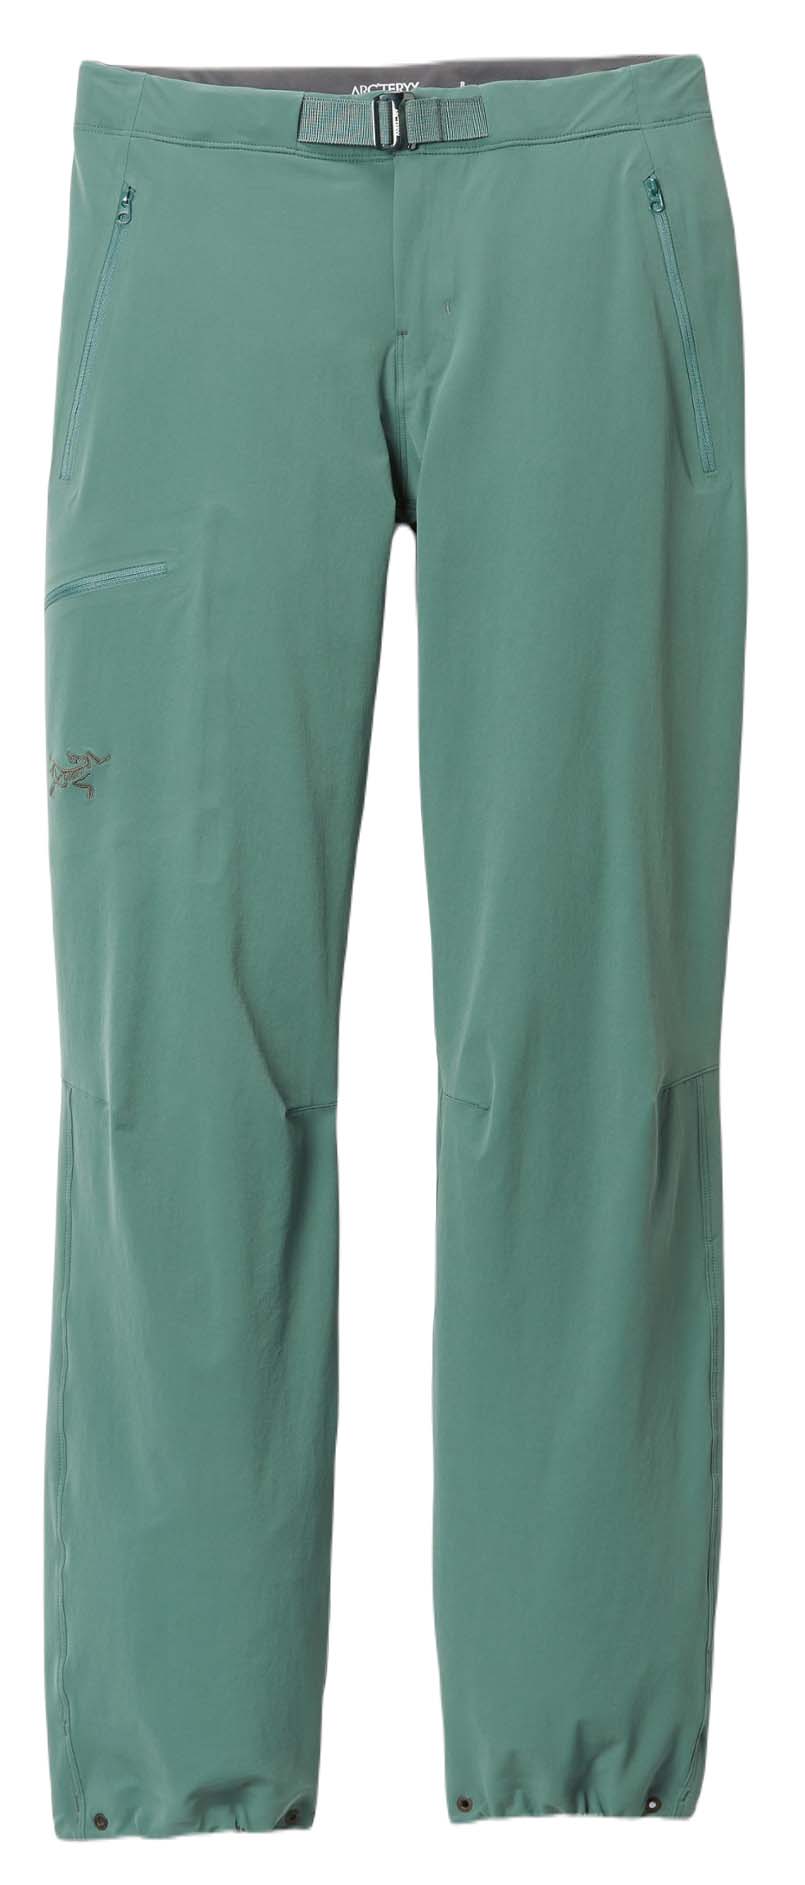 BURMA PANTS - Elastic Waist | Elephant pants, Elastic waist pants, Elastic  waist